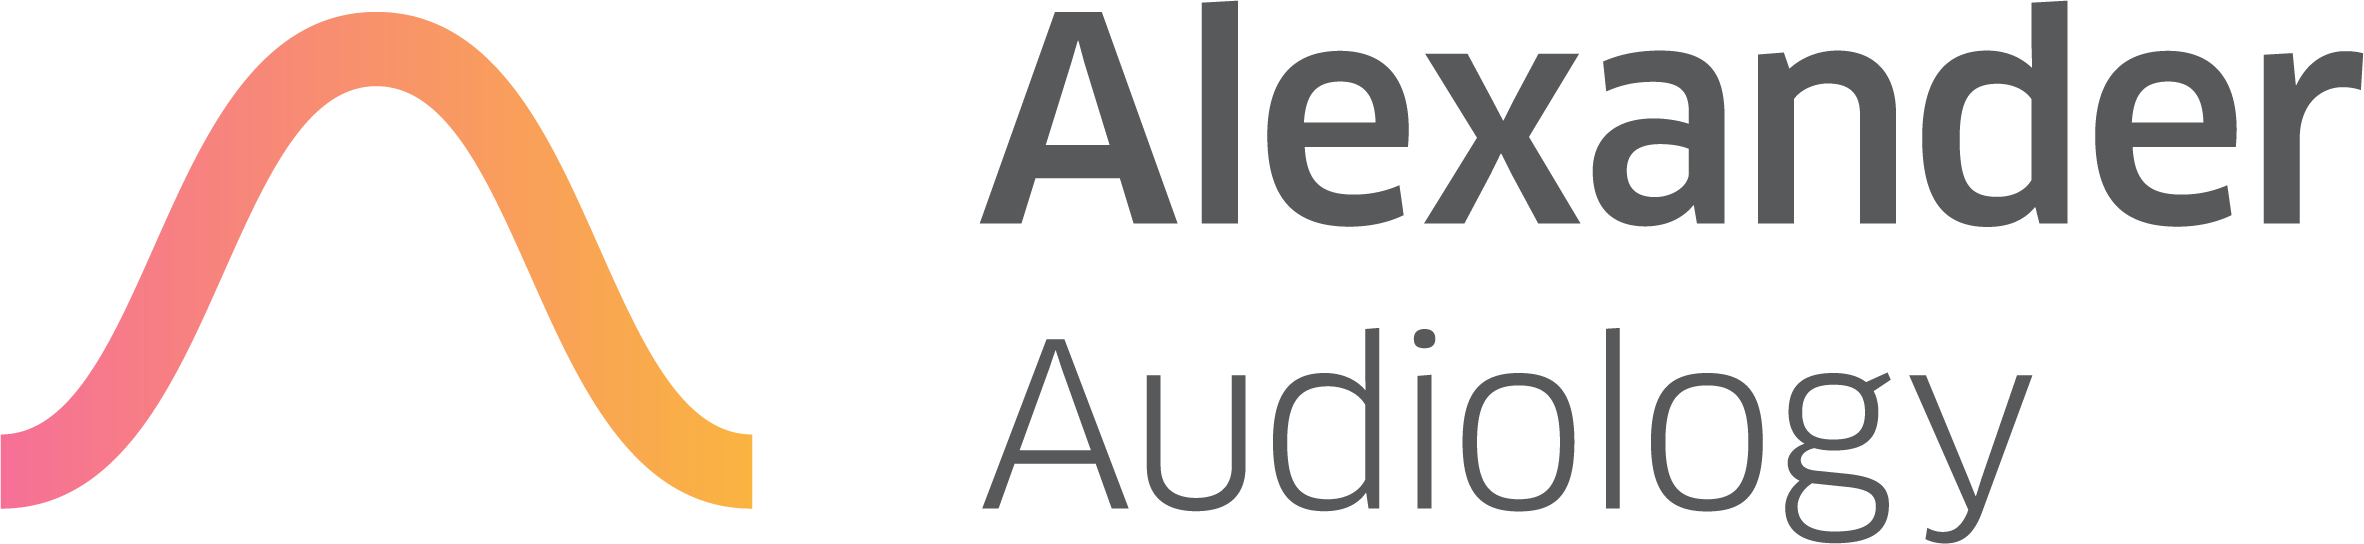 Ear Wax Removal Kit  Audiologist's Choice